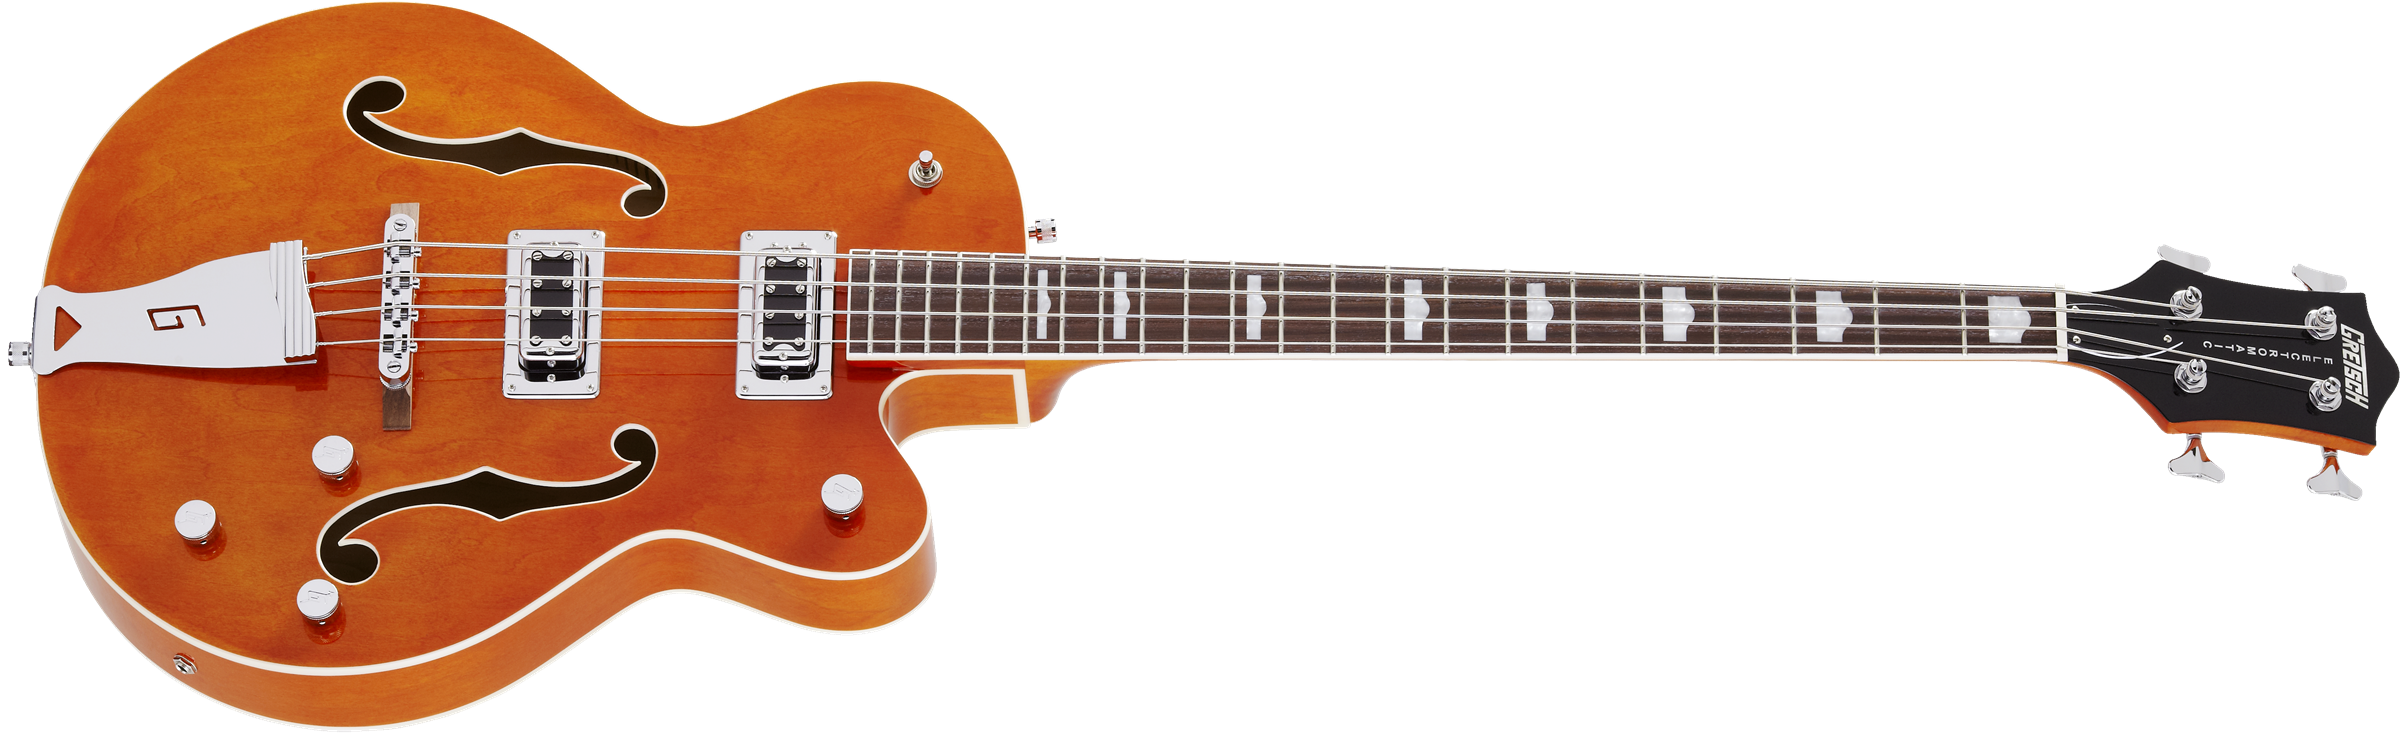 Gretsch G5440ls Long Scale Bass Electromatic Hollow Orange - Orange - Semi & hollow-body electric bass - Variation 1